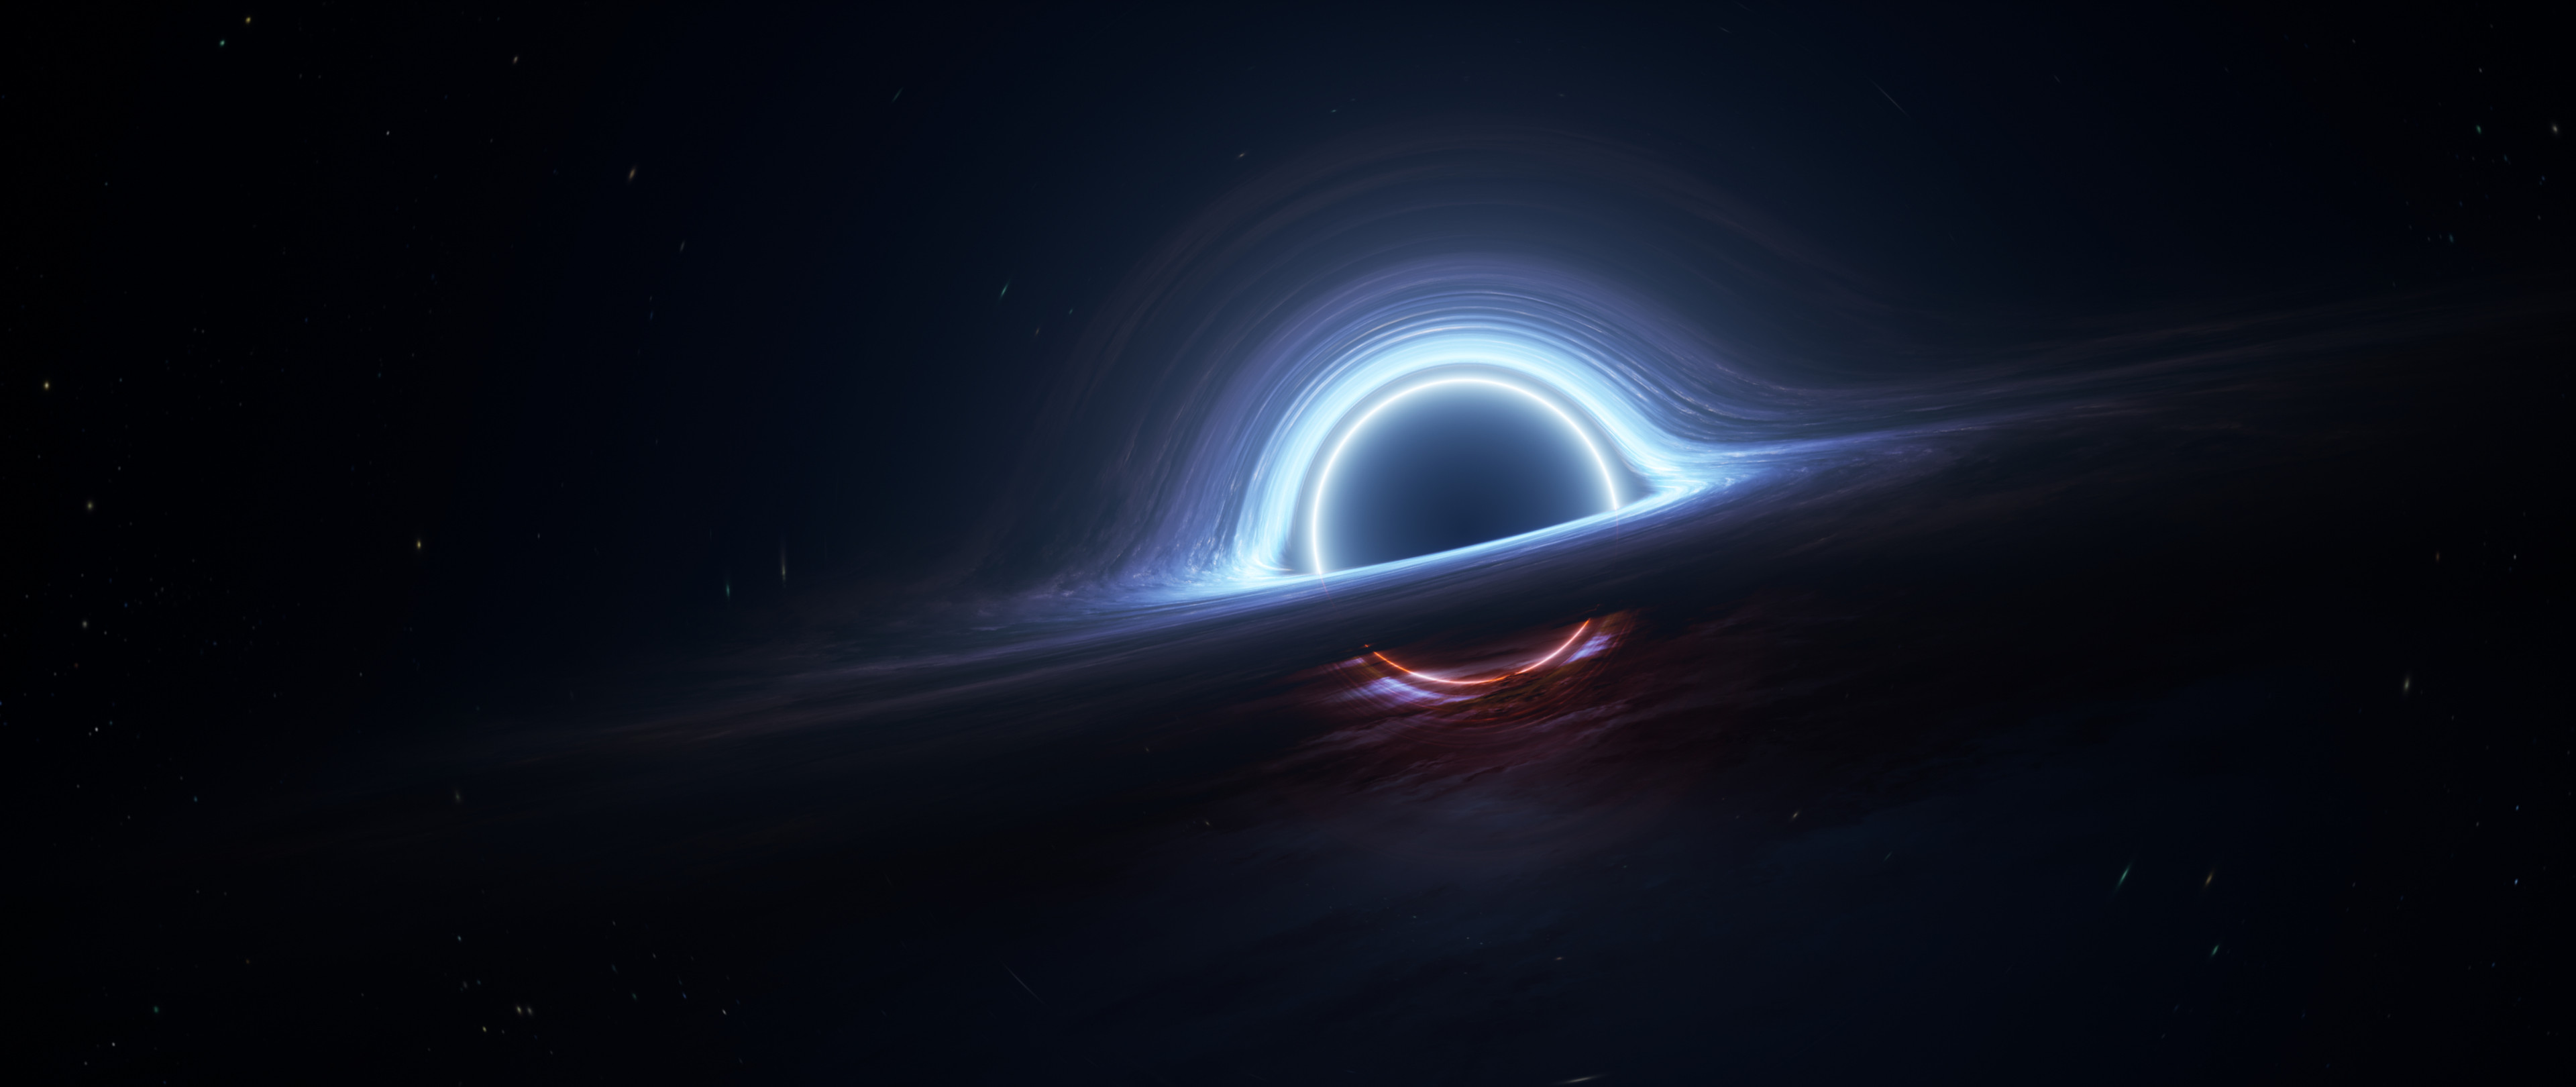 Sci Fi Black Hole HD Wallpaper